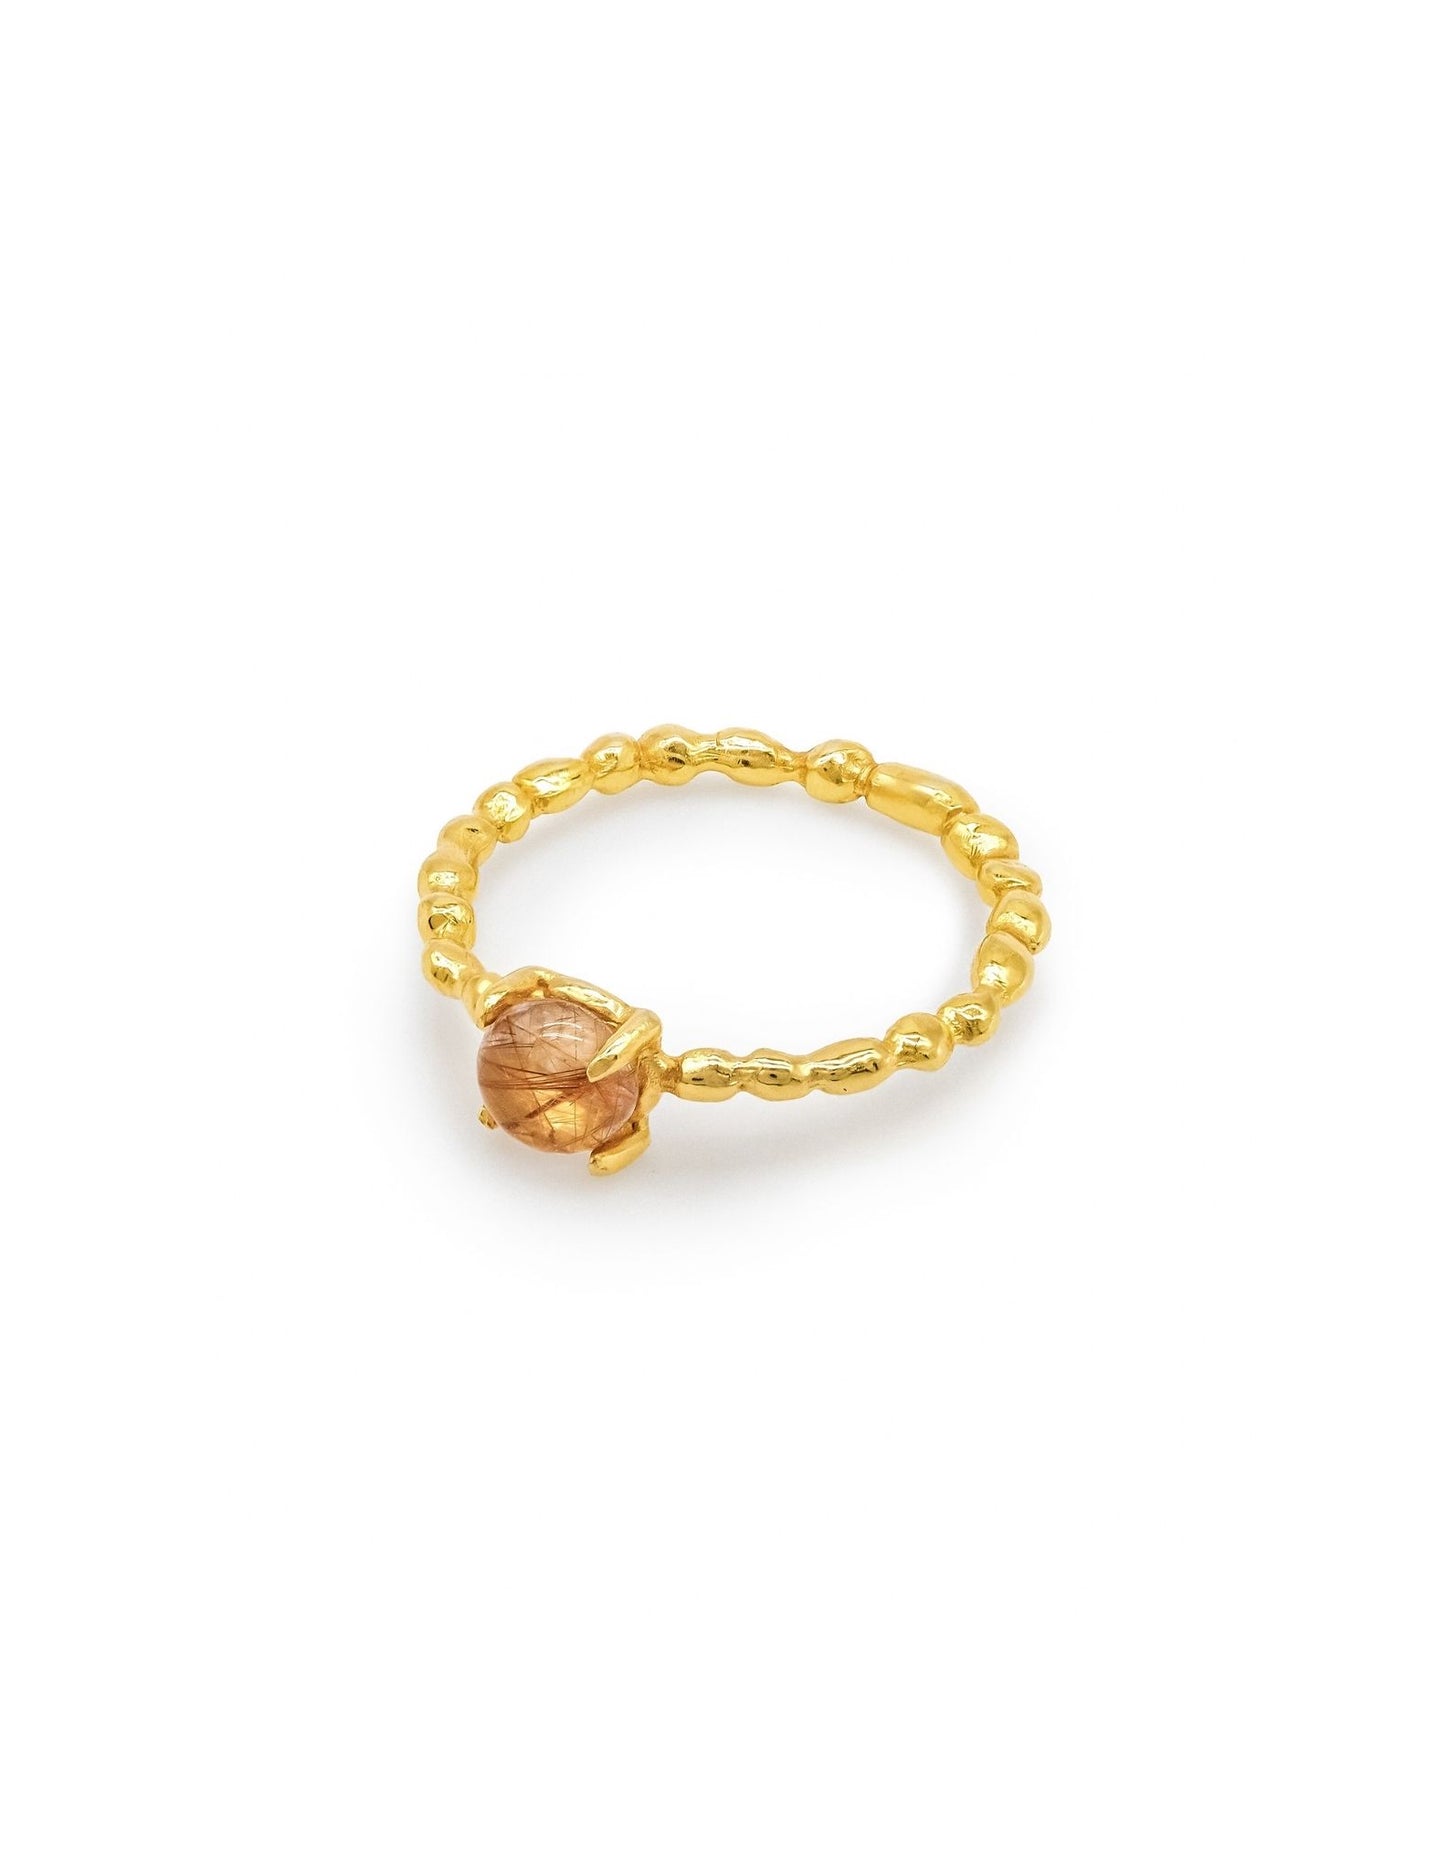 Kharys jewelry organic shaped rutile snowball earrings in 18k gold vermeil